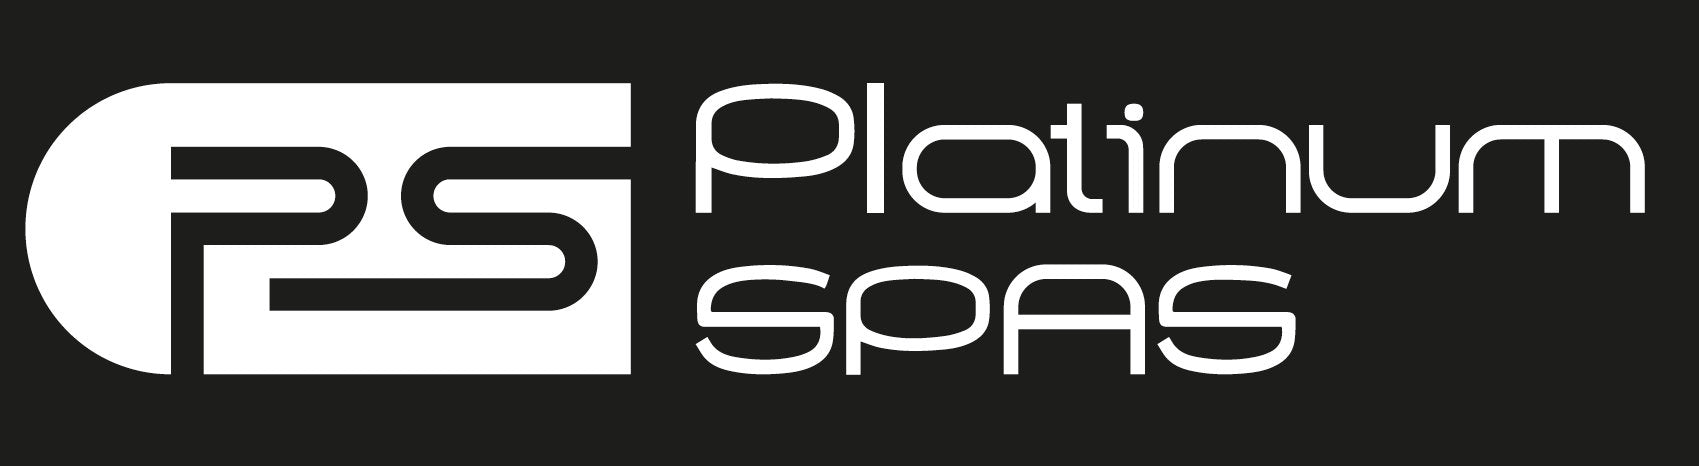 Platinum Spas logo